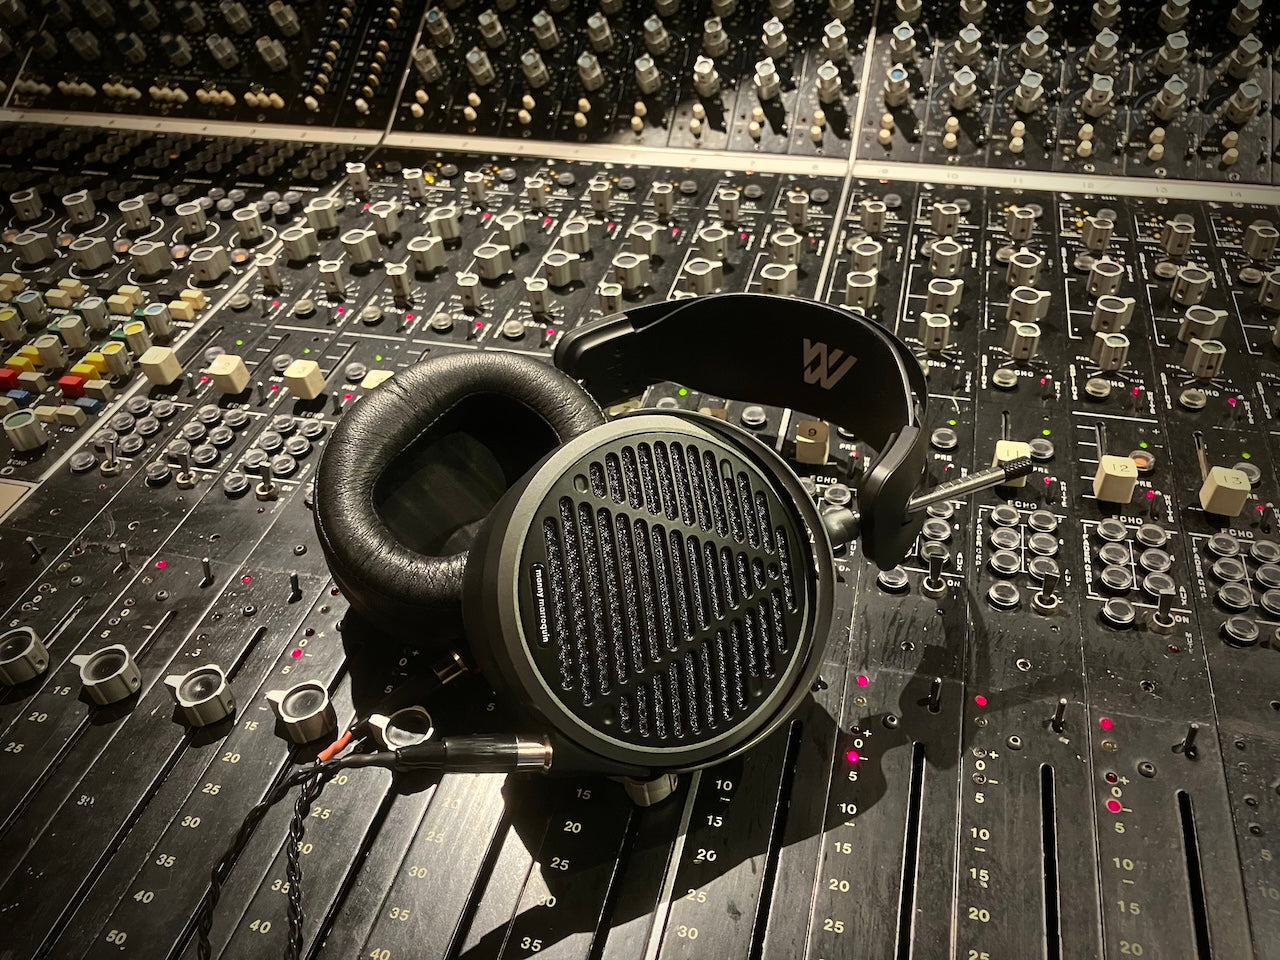 Audeze Mm-500 headphones on mixing table